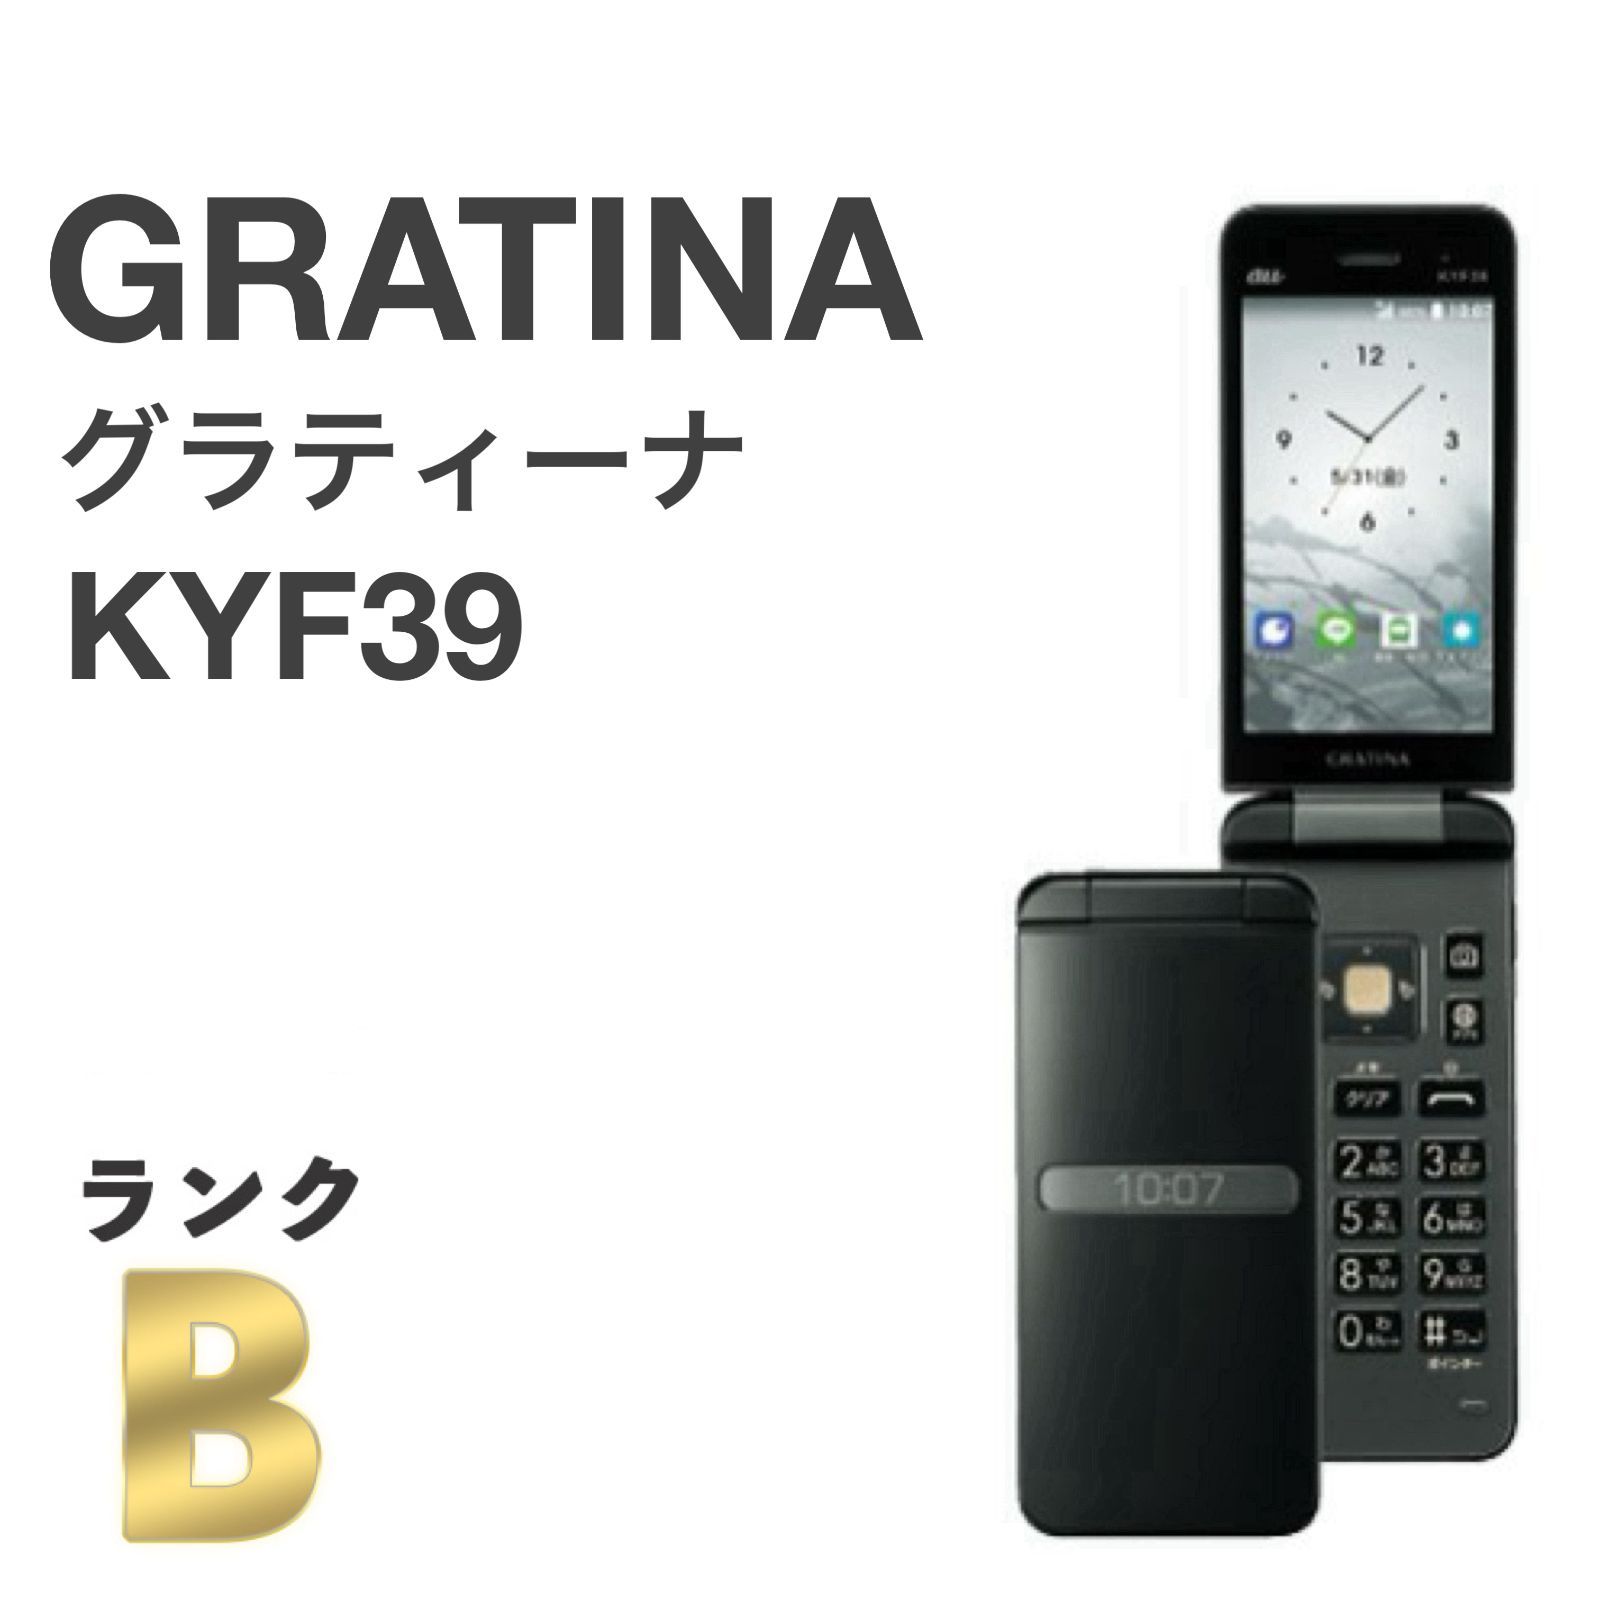 素敵な 【新品・未使用】AU SIMロック解除済 KYF39 墨 GRATINA 携帯 ...